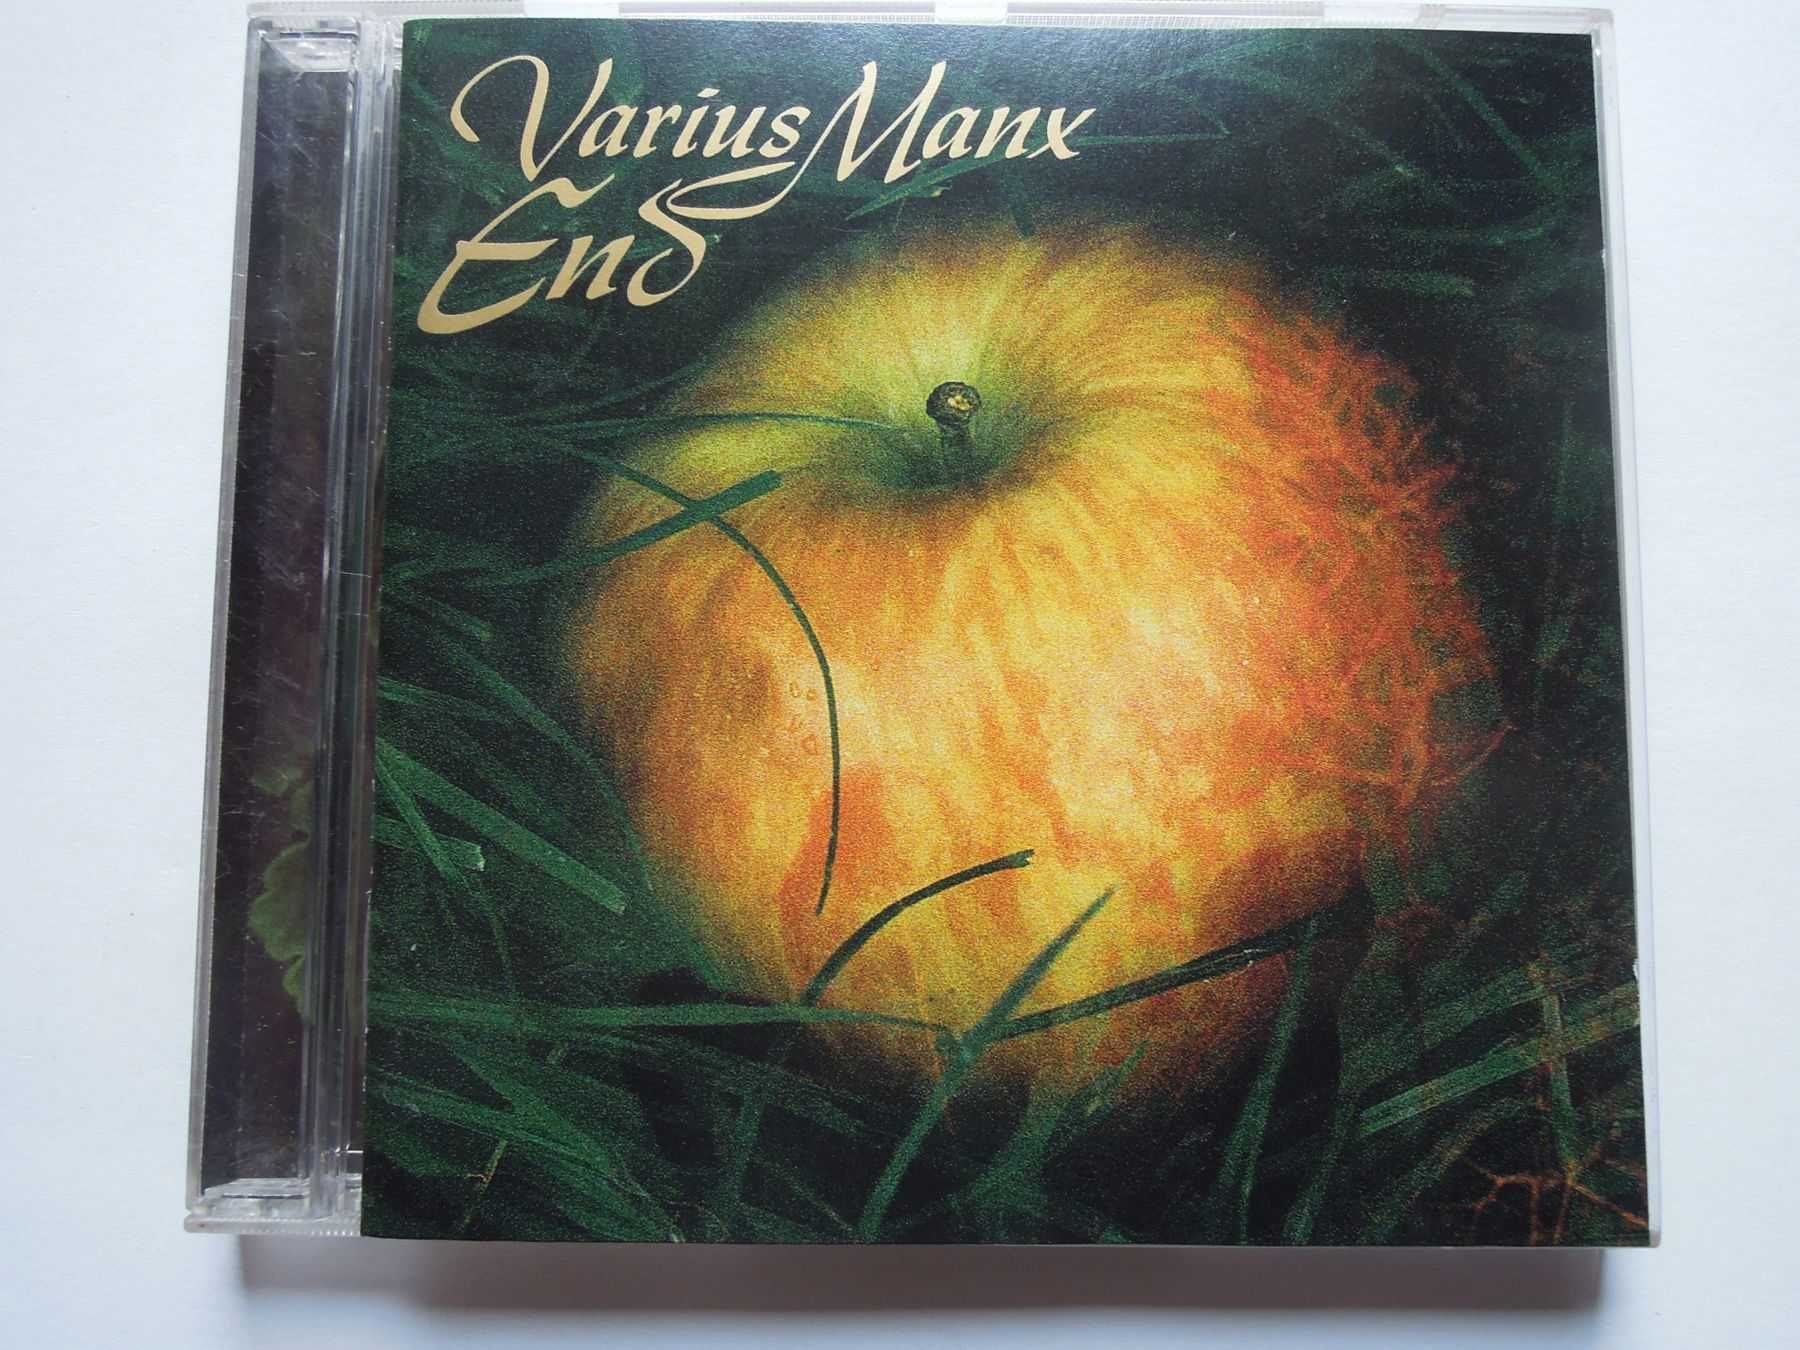 Varius manx płyty cd